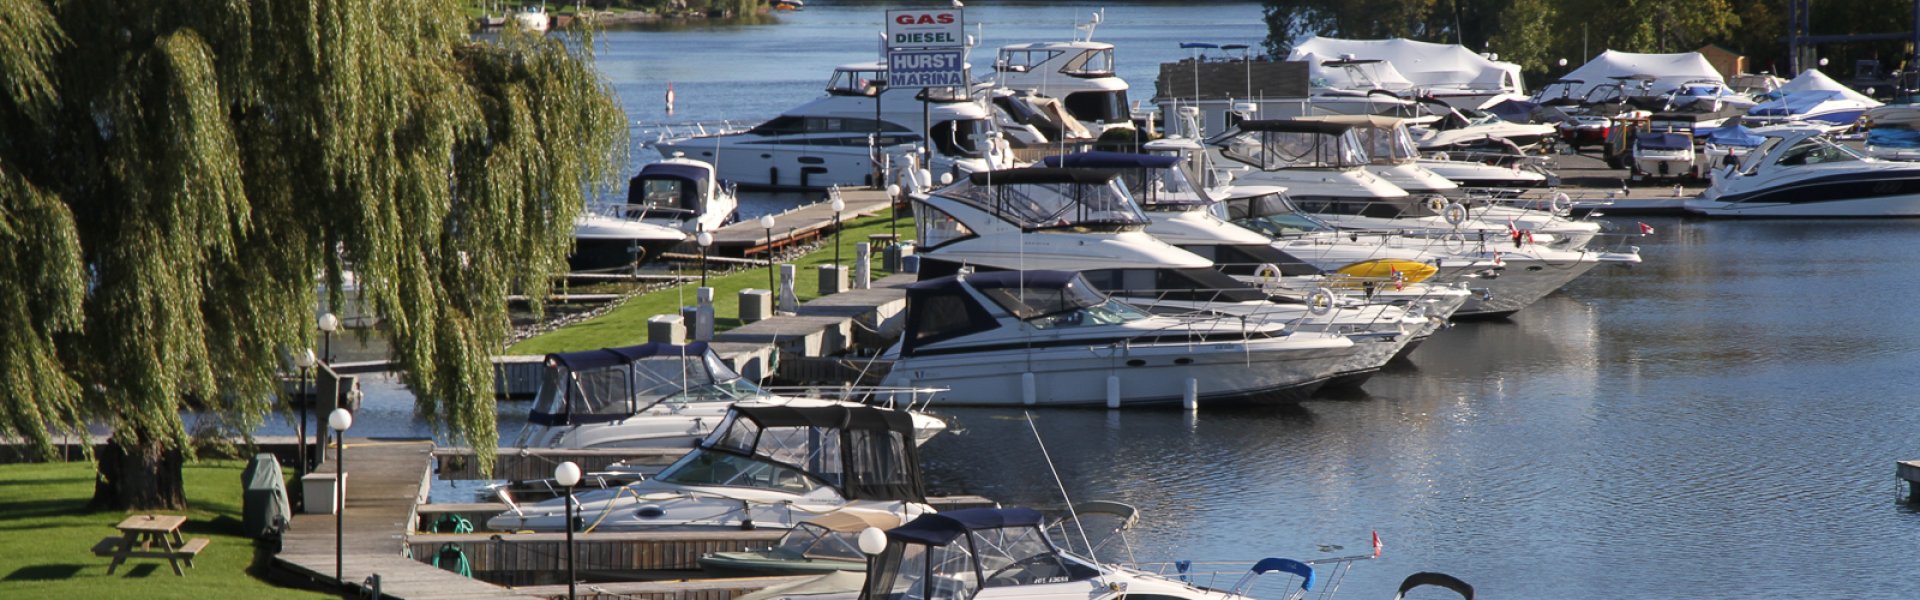 Boats for Sale  Hurst Marina - Boat Sales in Ottawa Ontario